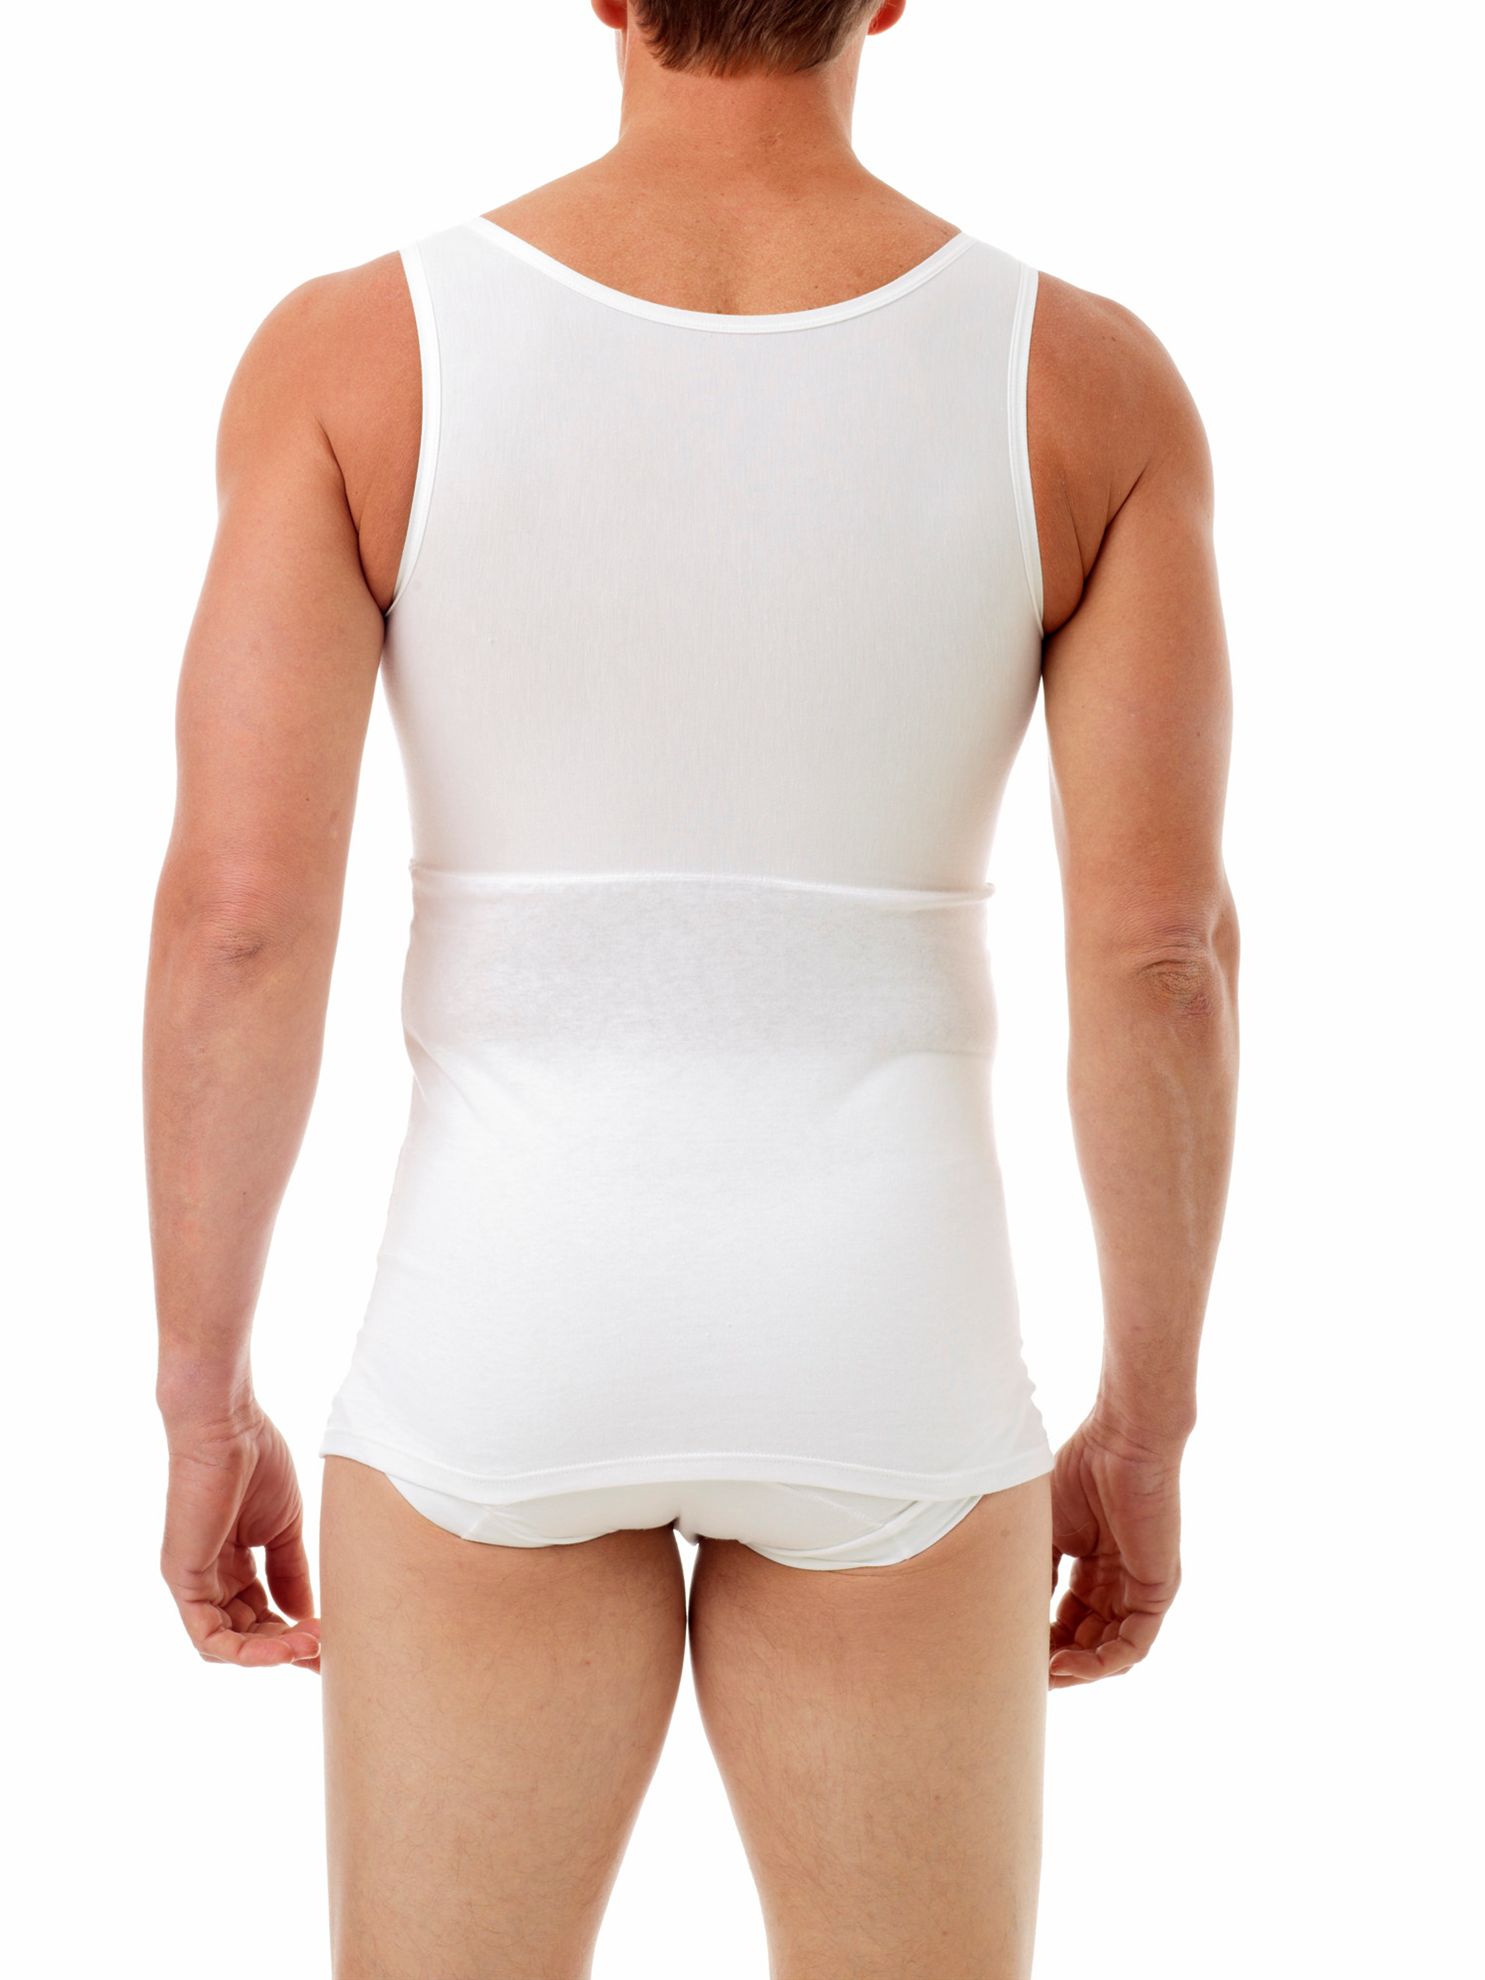 Gynecomastia Compression Shirt For Men - Waist Trainer Body Shaper